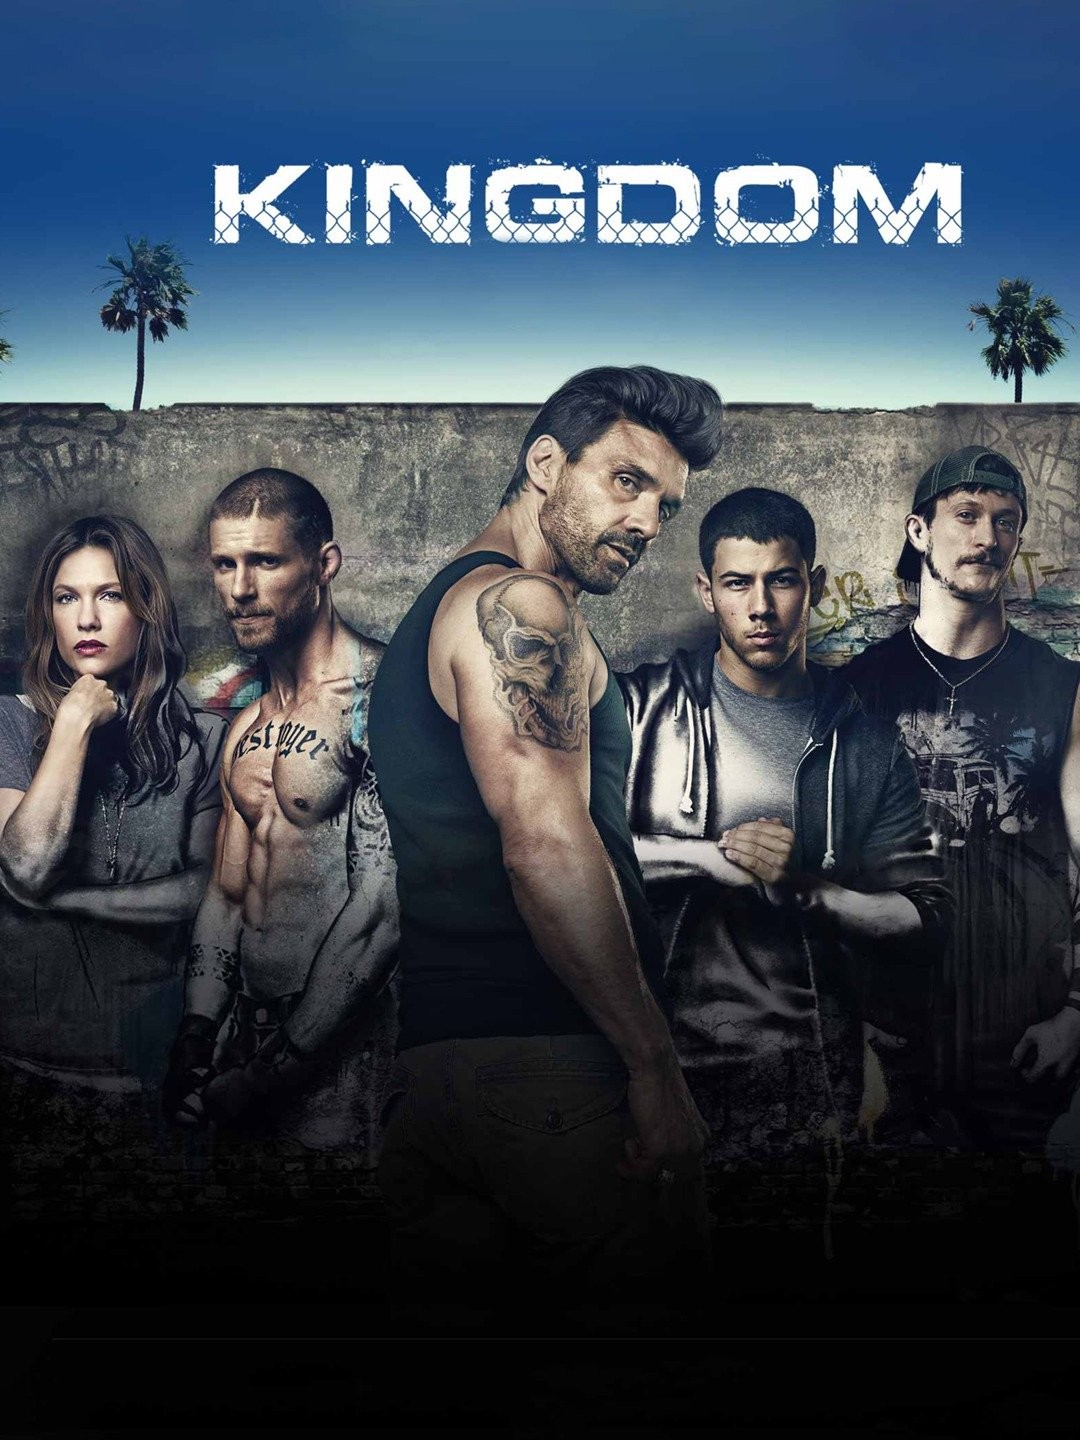 The Last Kingdom - Rotten Tomatoes